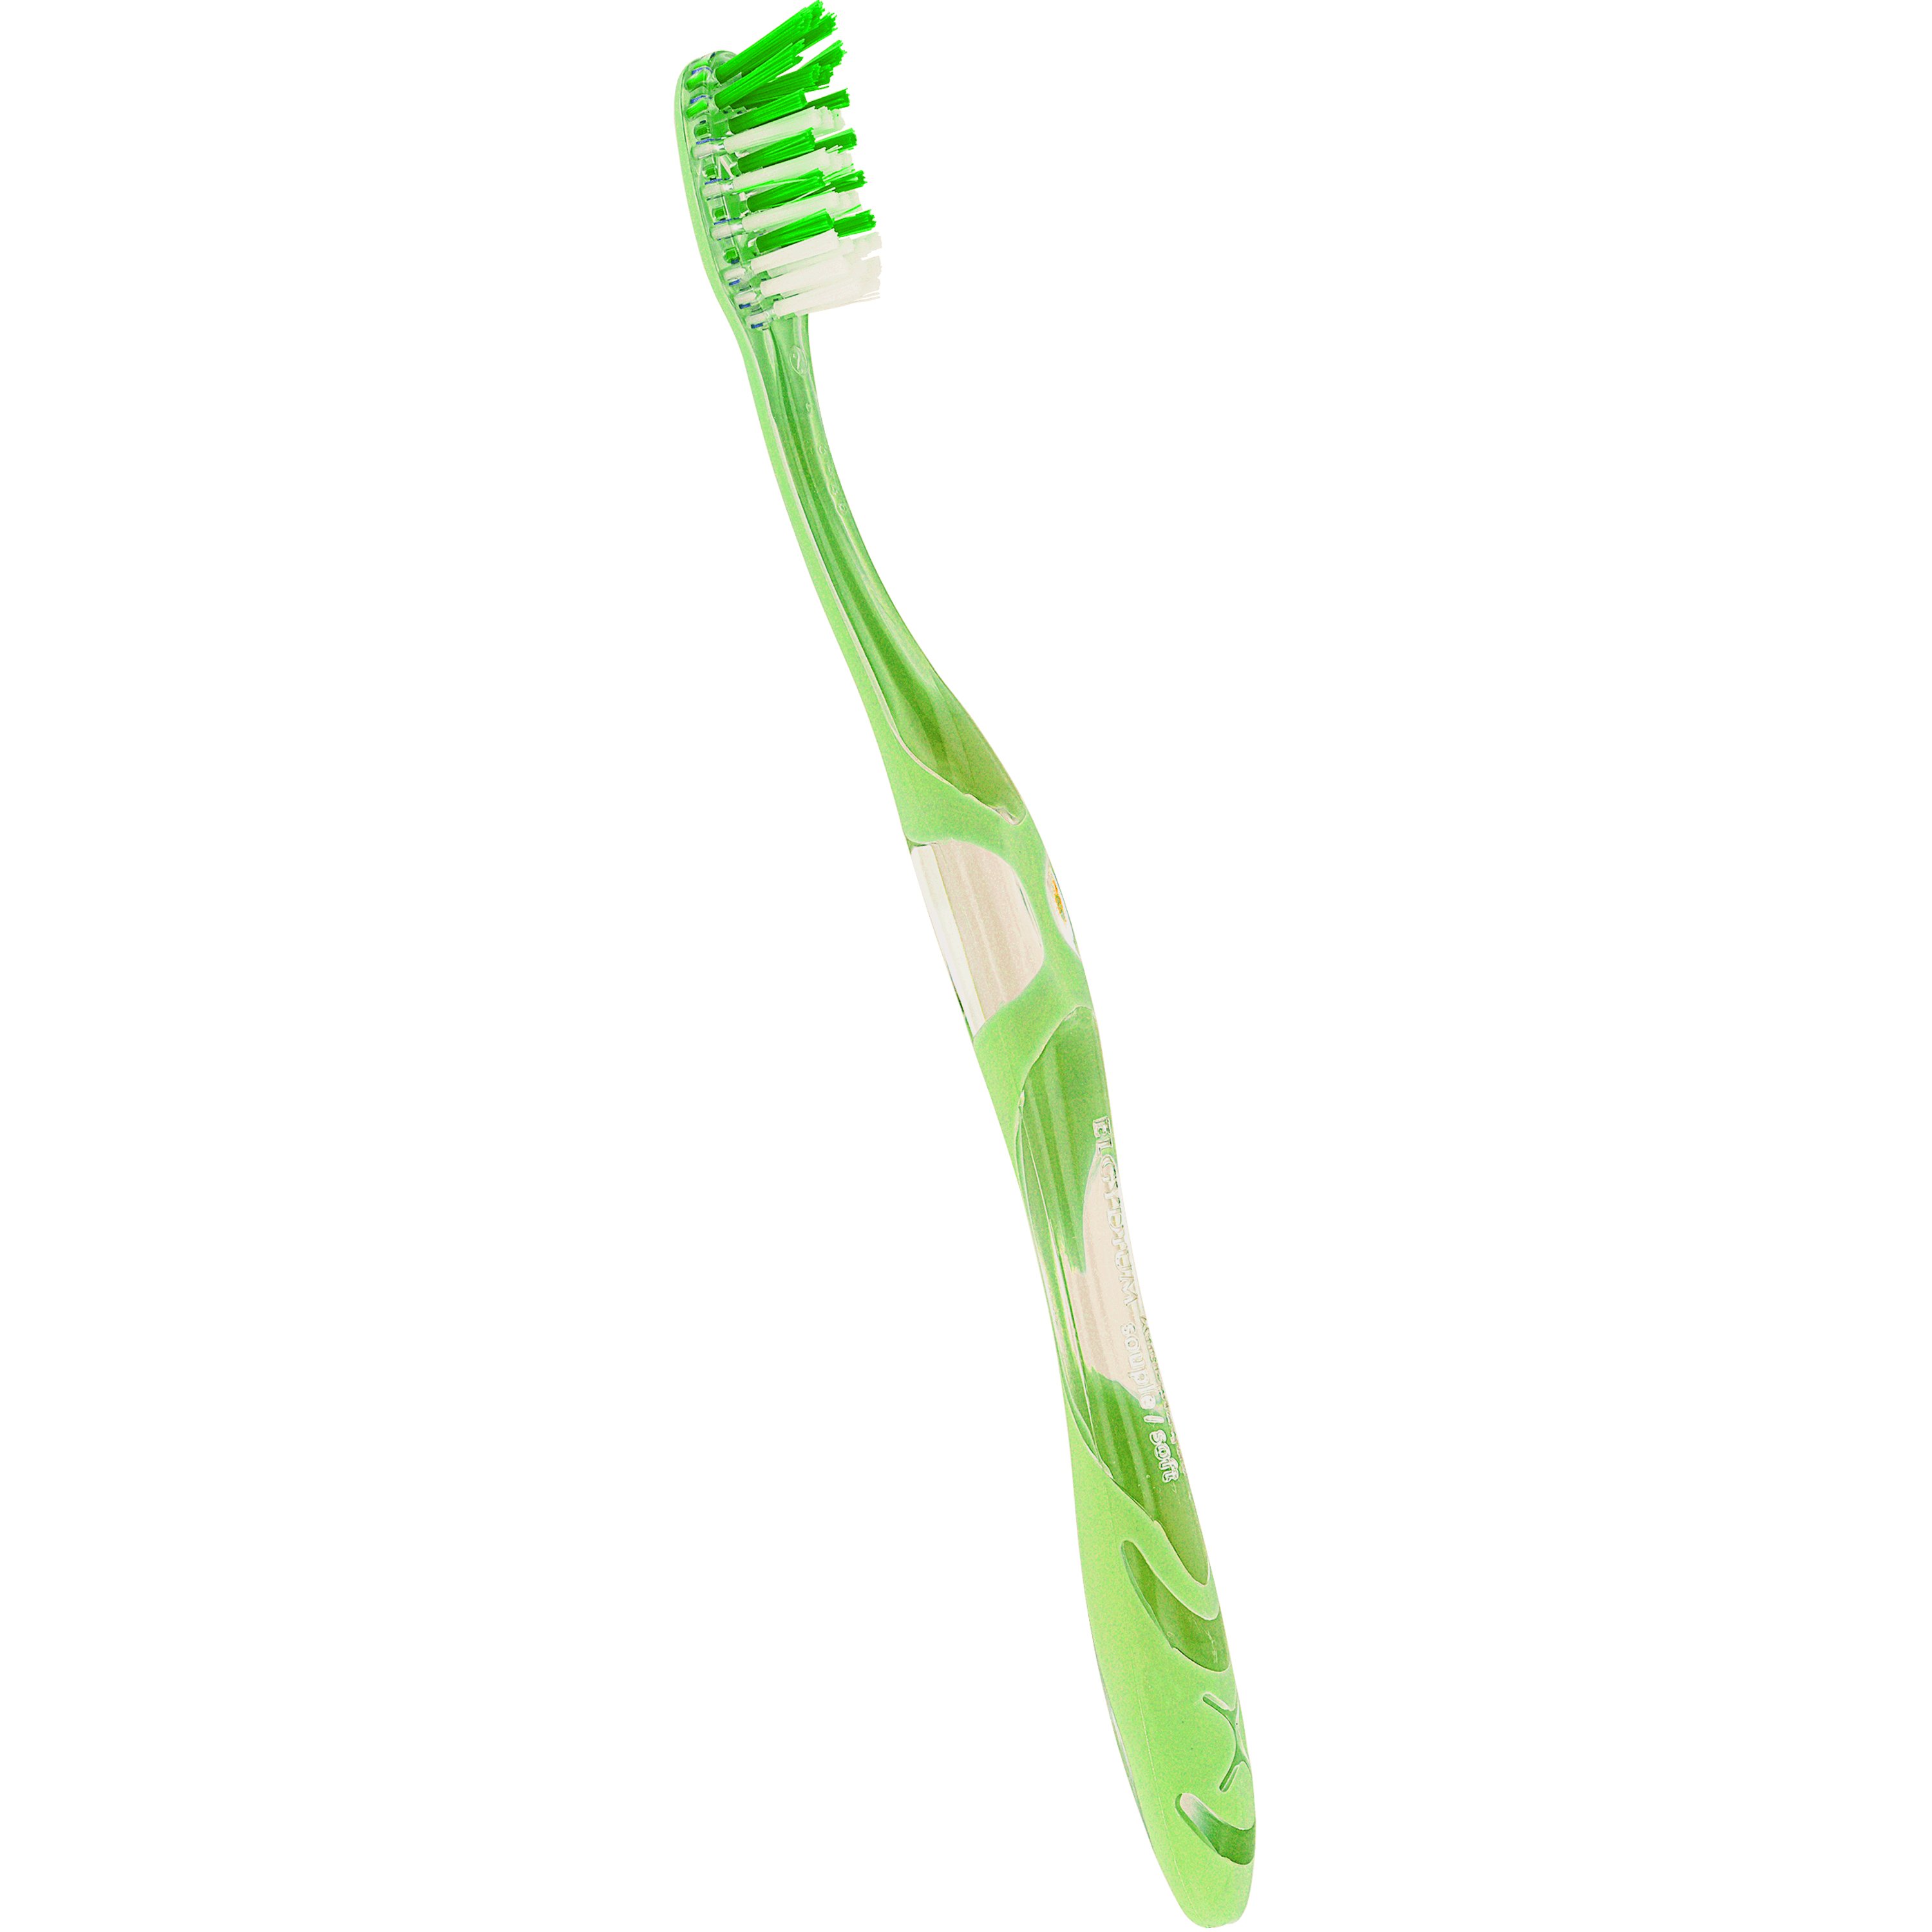 Elgydium Toothbrush Antiplaque Soft Μαλακή Οδοντόβουρτσα για Βαθύ Καθαρισμό & Απομάκρυνση Οδοντικής Πλάκας 1 Τεμάχιο – Πράσινο